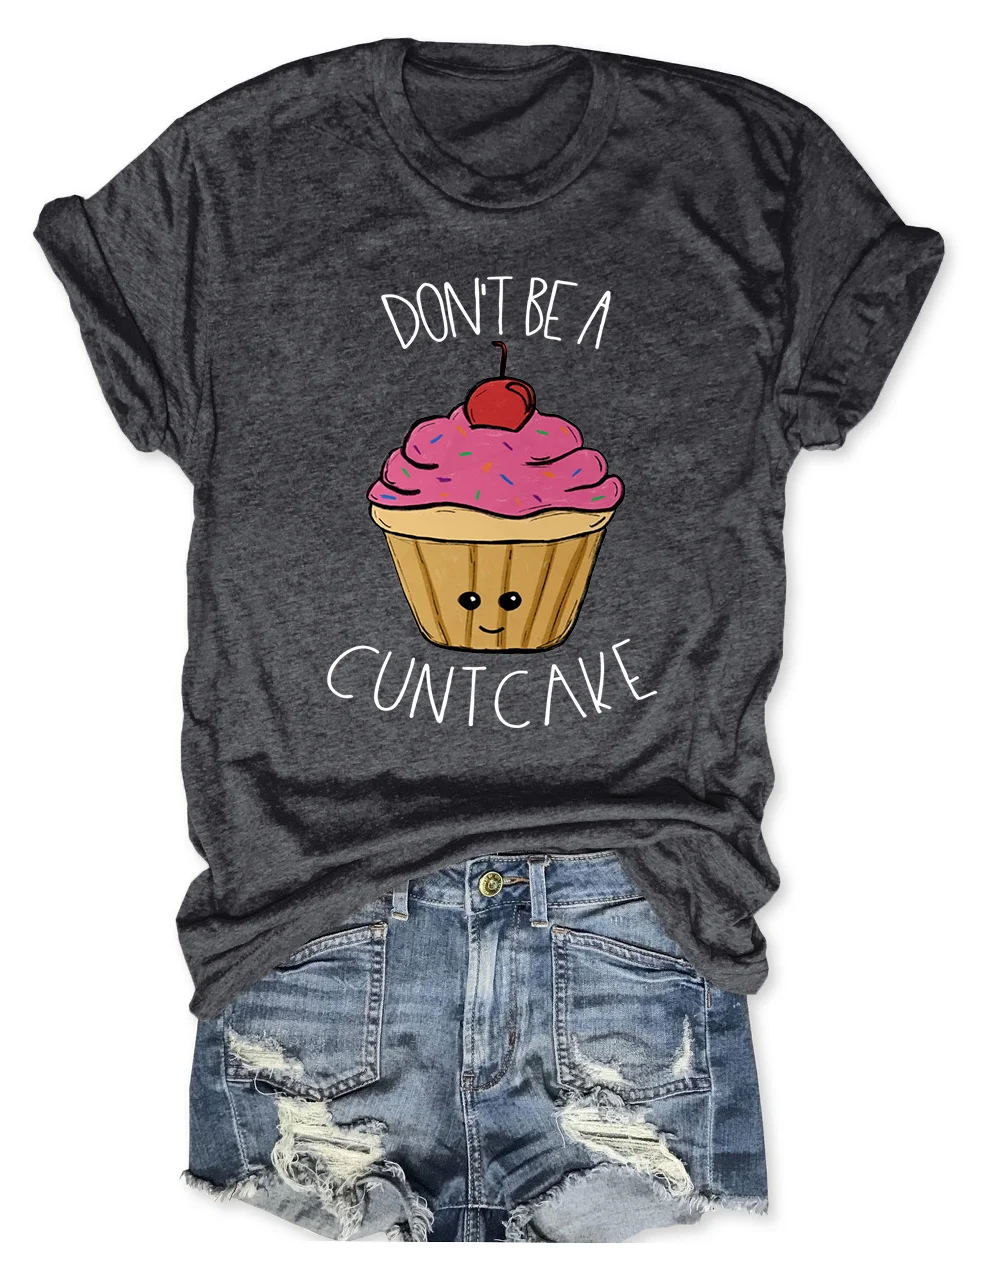 Don't Be A Twatwaffle/Cuntcake Funny T-Shirt